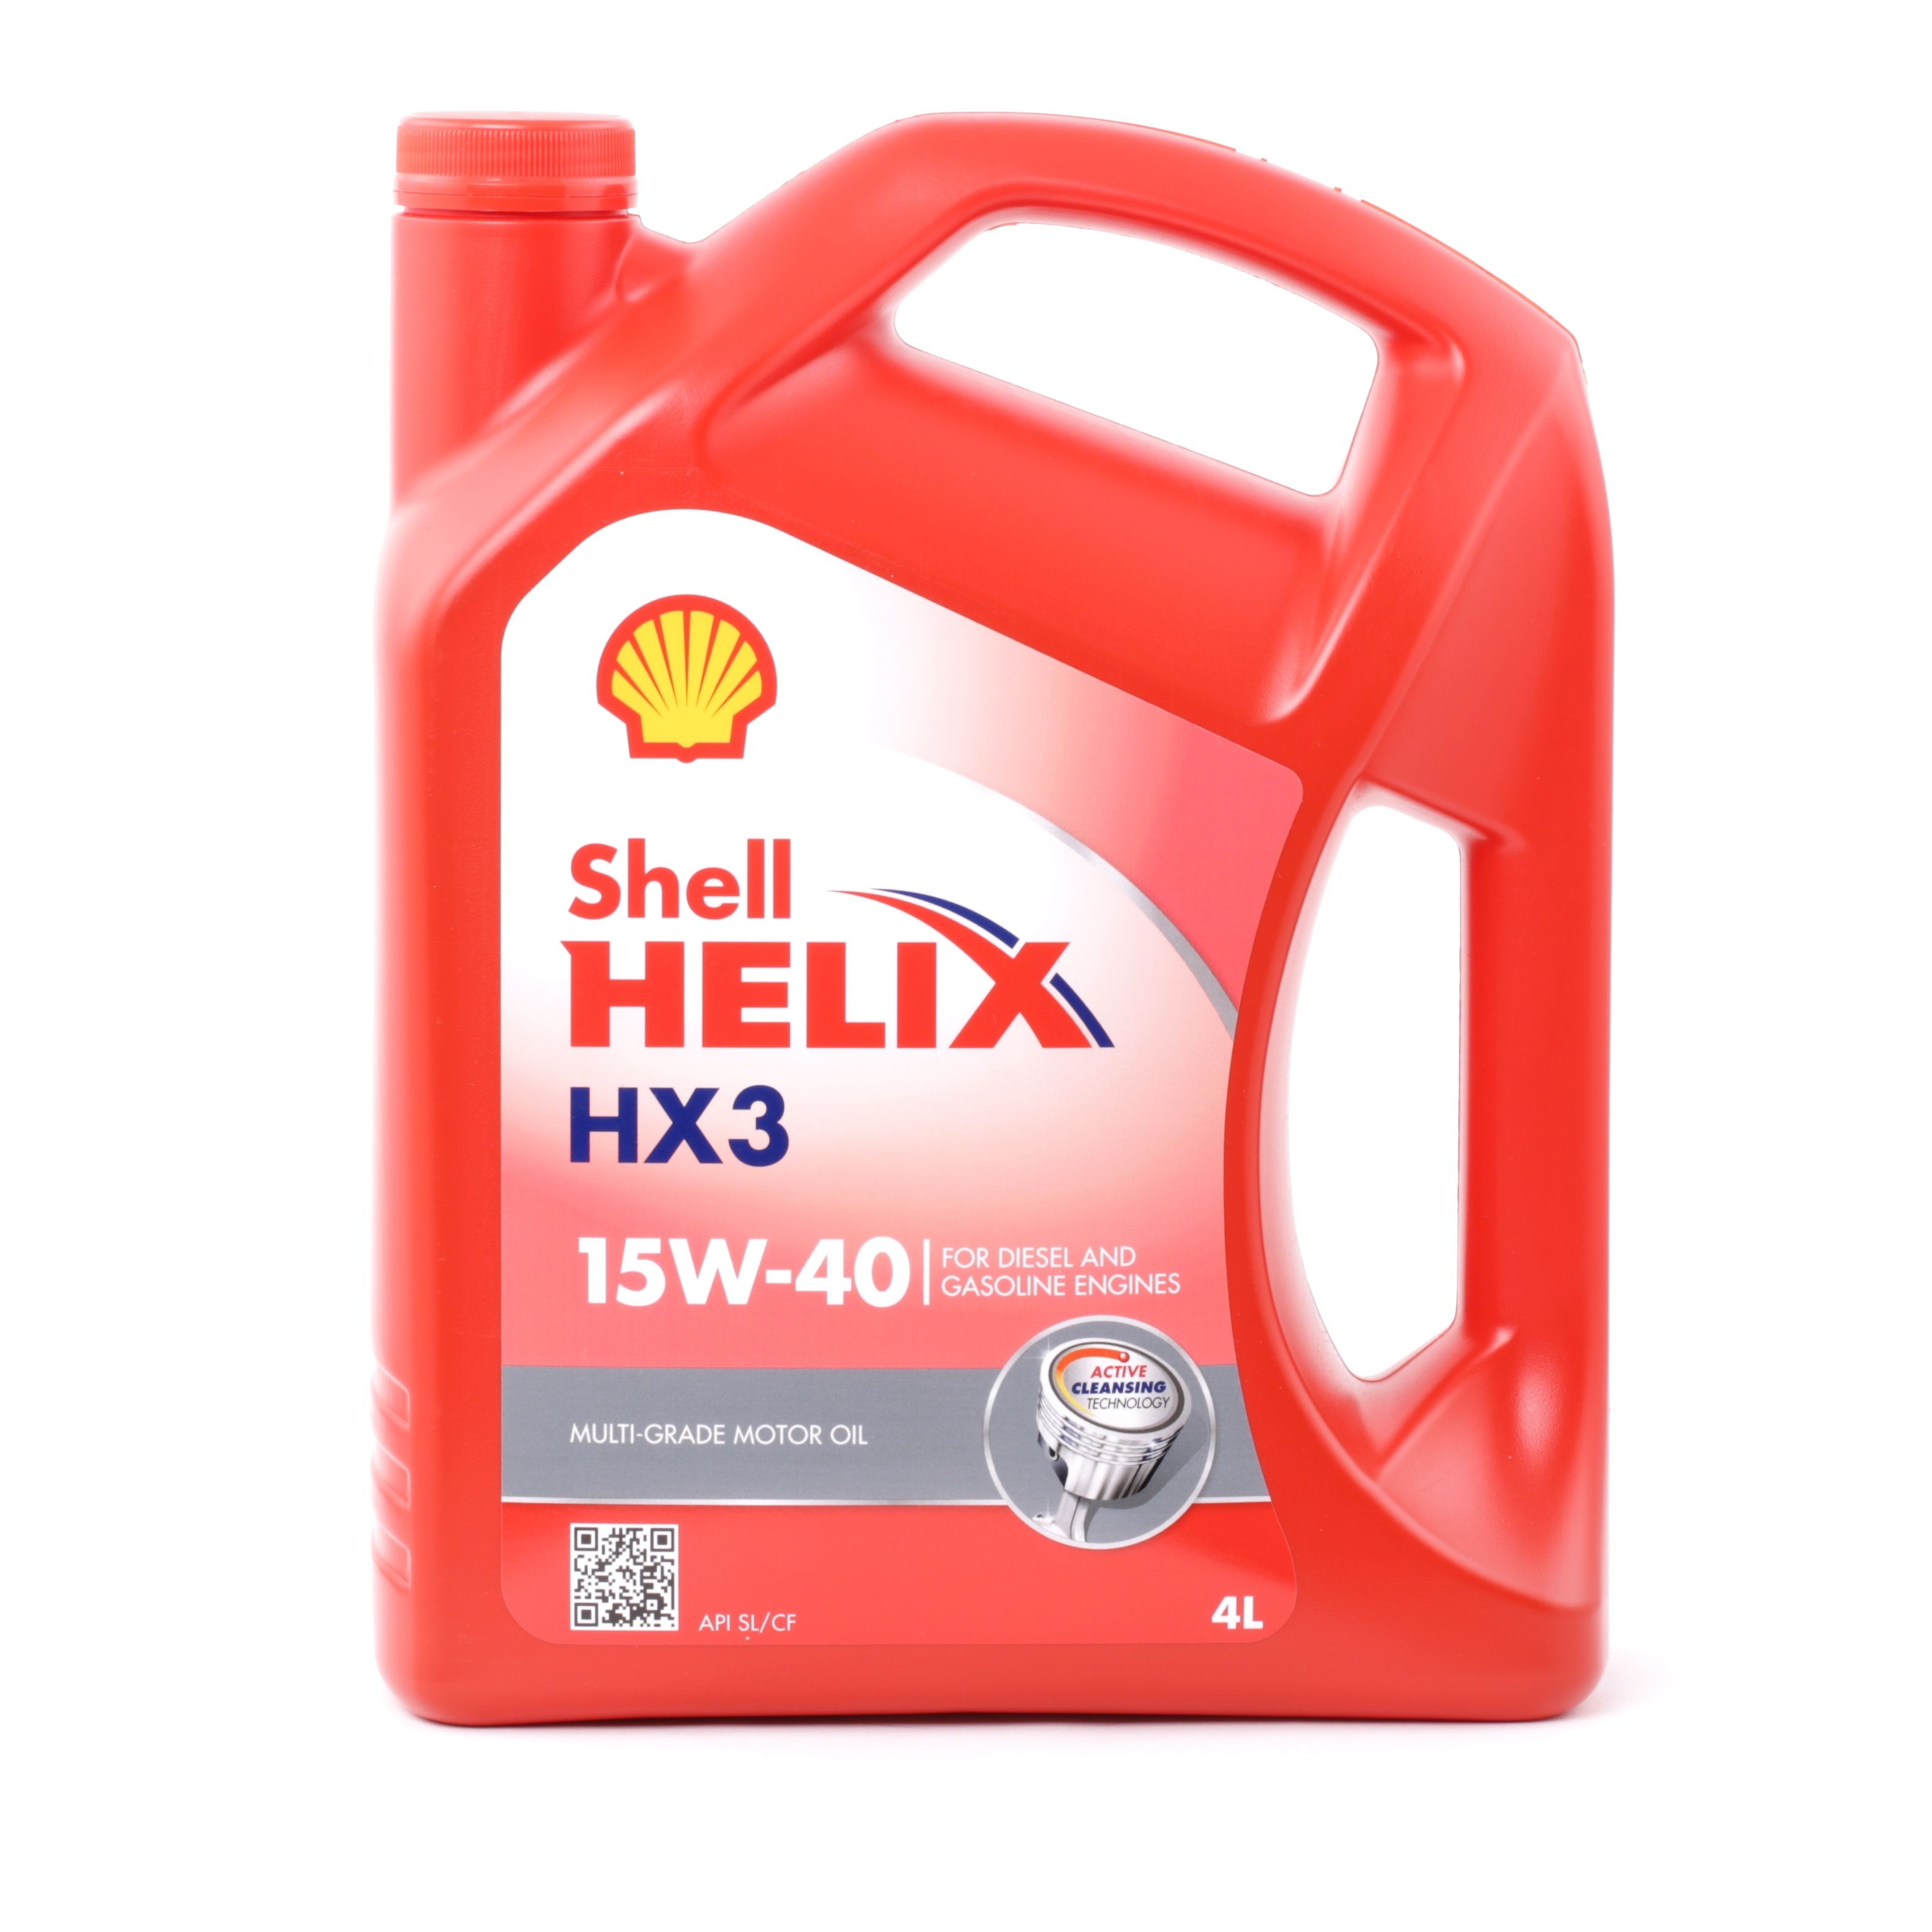 Buy Car oil SHELL diesel 550039926 Helix, HX3 15W-40, 4l, Mineral Oil